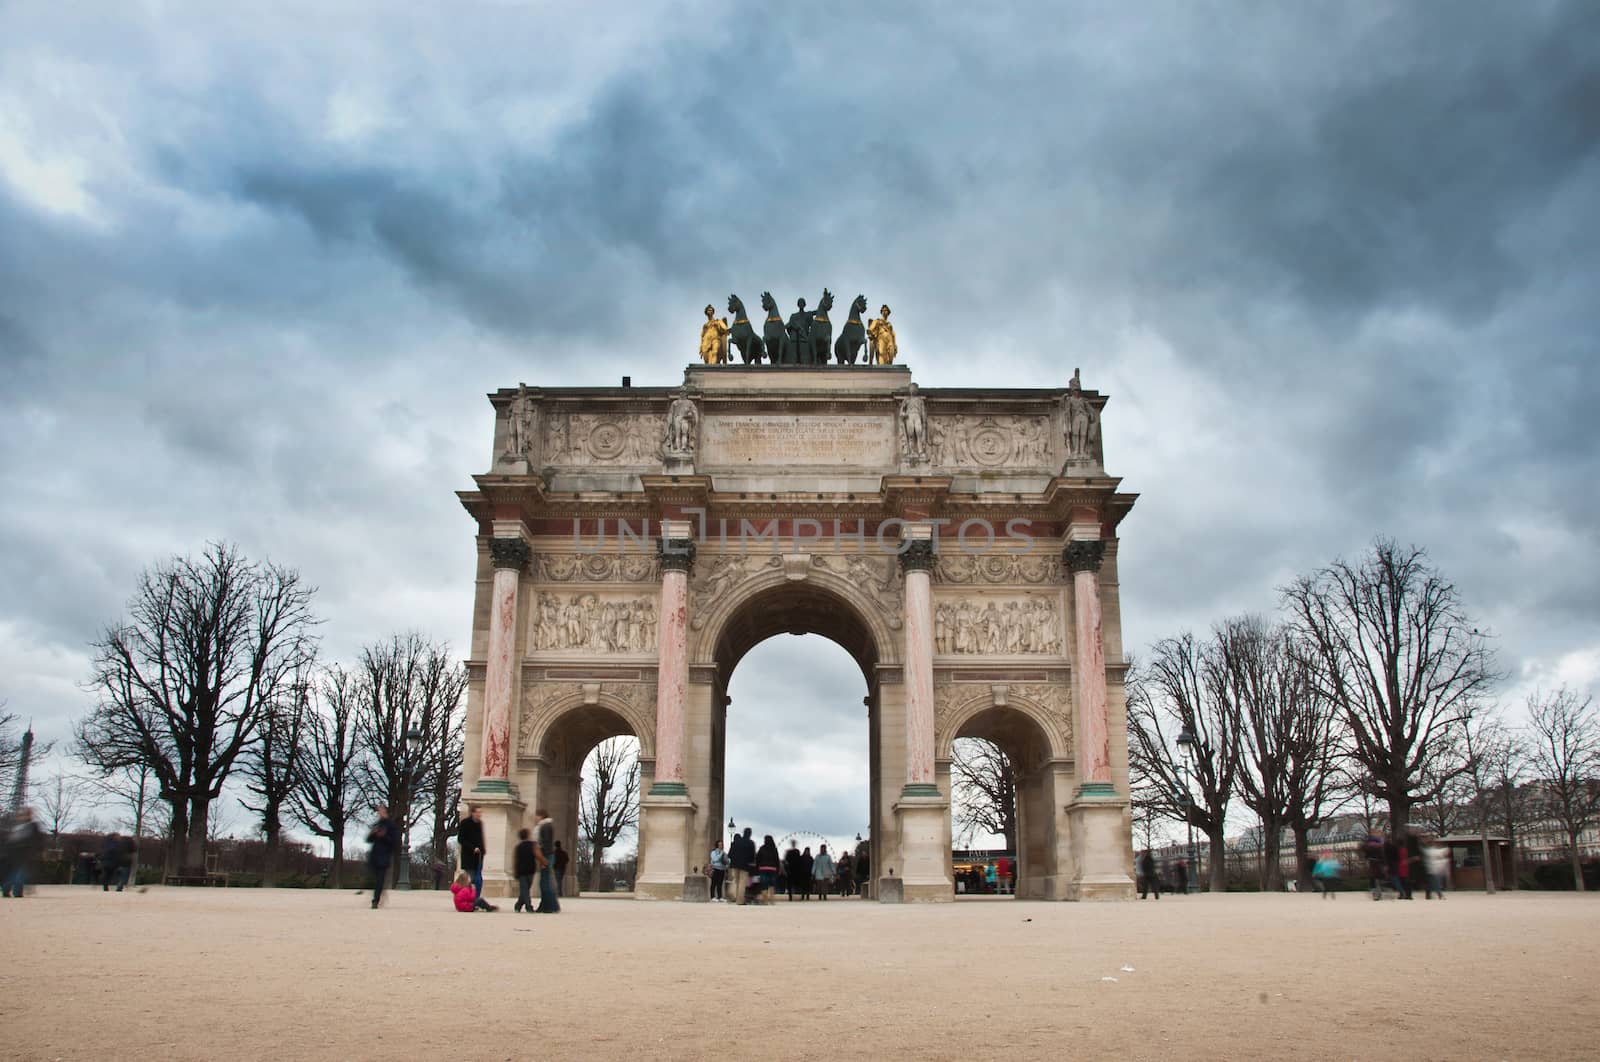 Carroussel arch in Paris by NeydtStock